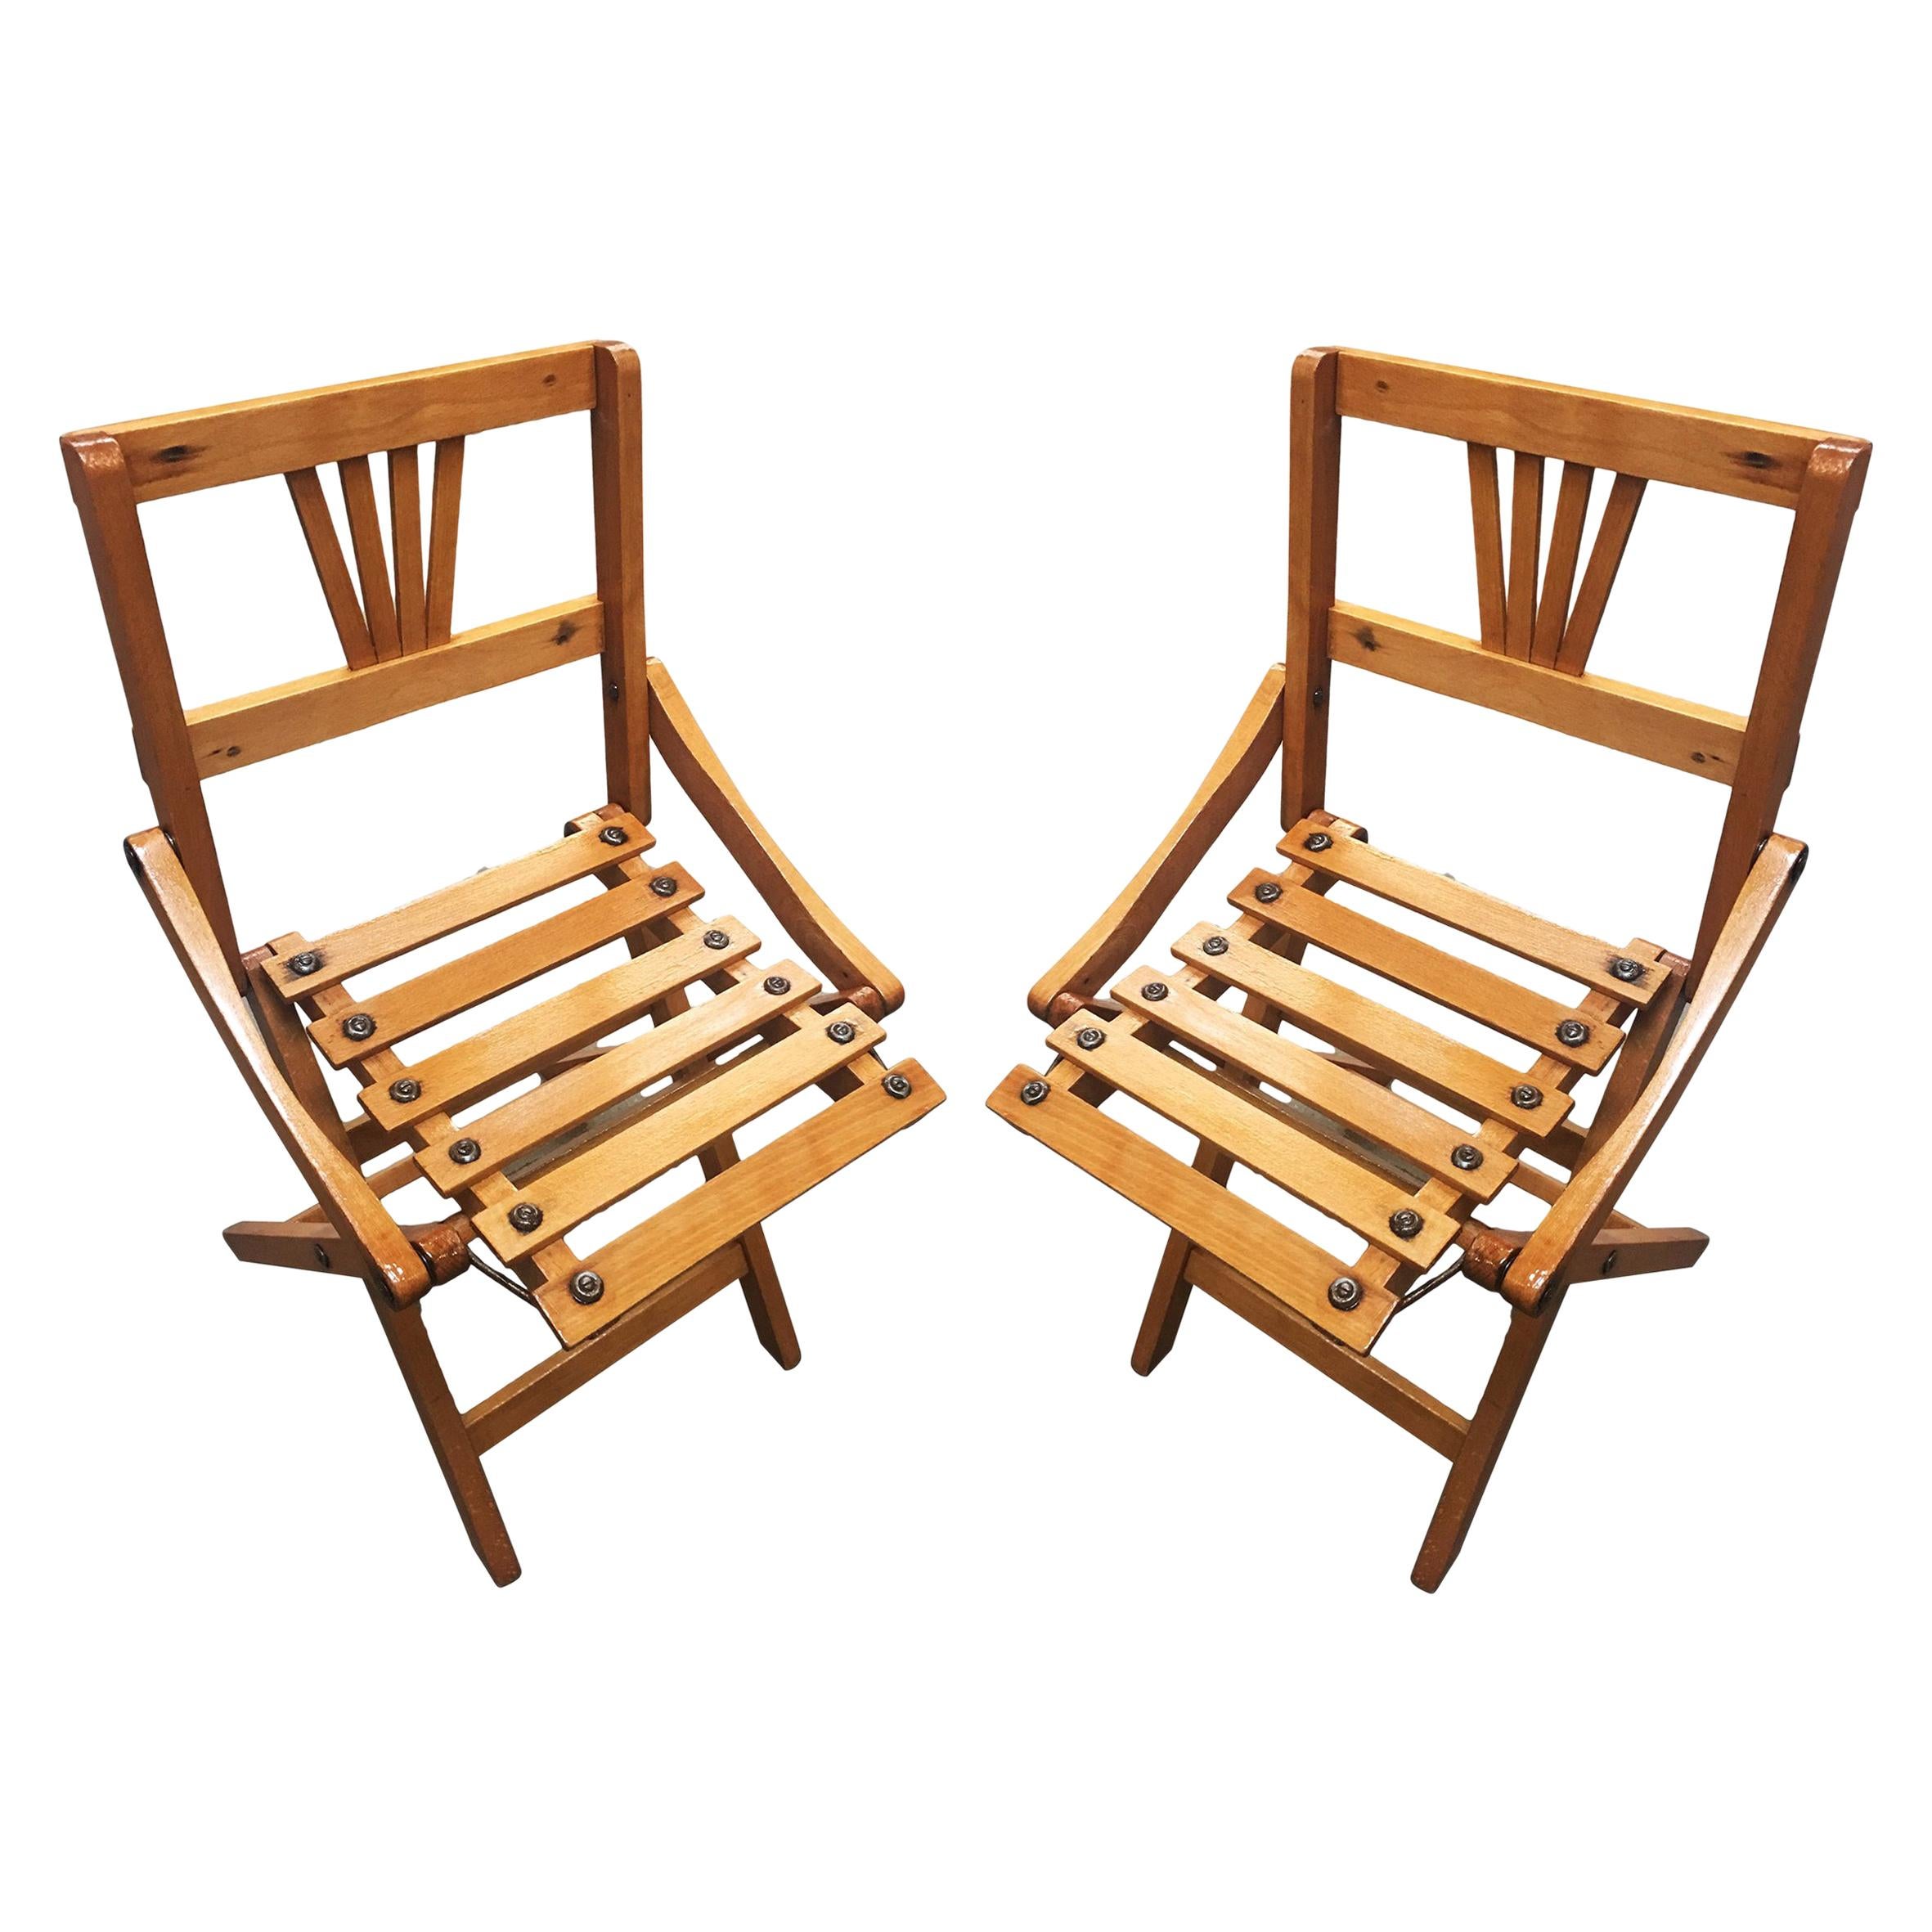 https://a.1stdibscdn.com/pair-of-george-nelson-inspired-child-size-slat-folding-chair-for-sale/1121189/f_171166621575617506155/17116662_master.jpg